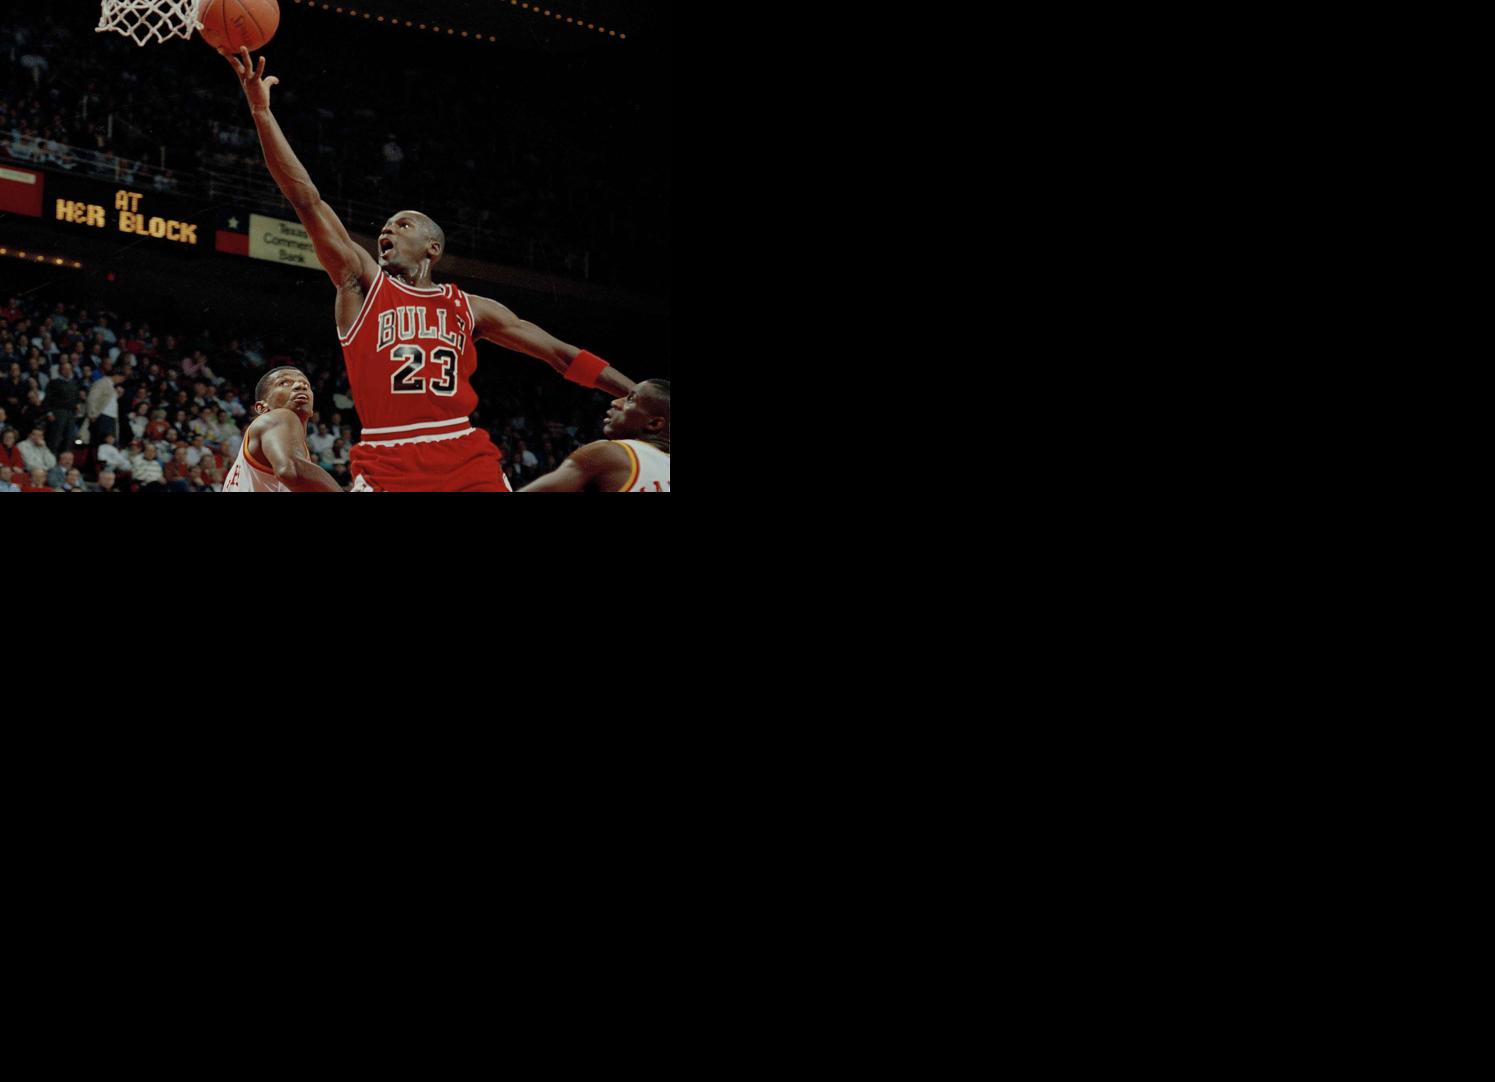 Sports slam dunk crowd basketball michael jordan chicago bulls